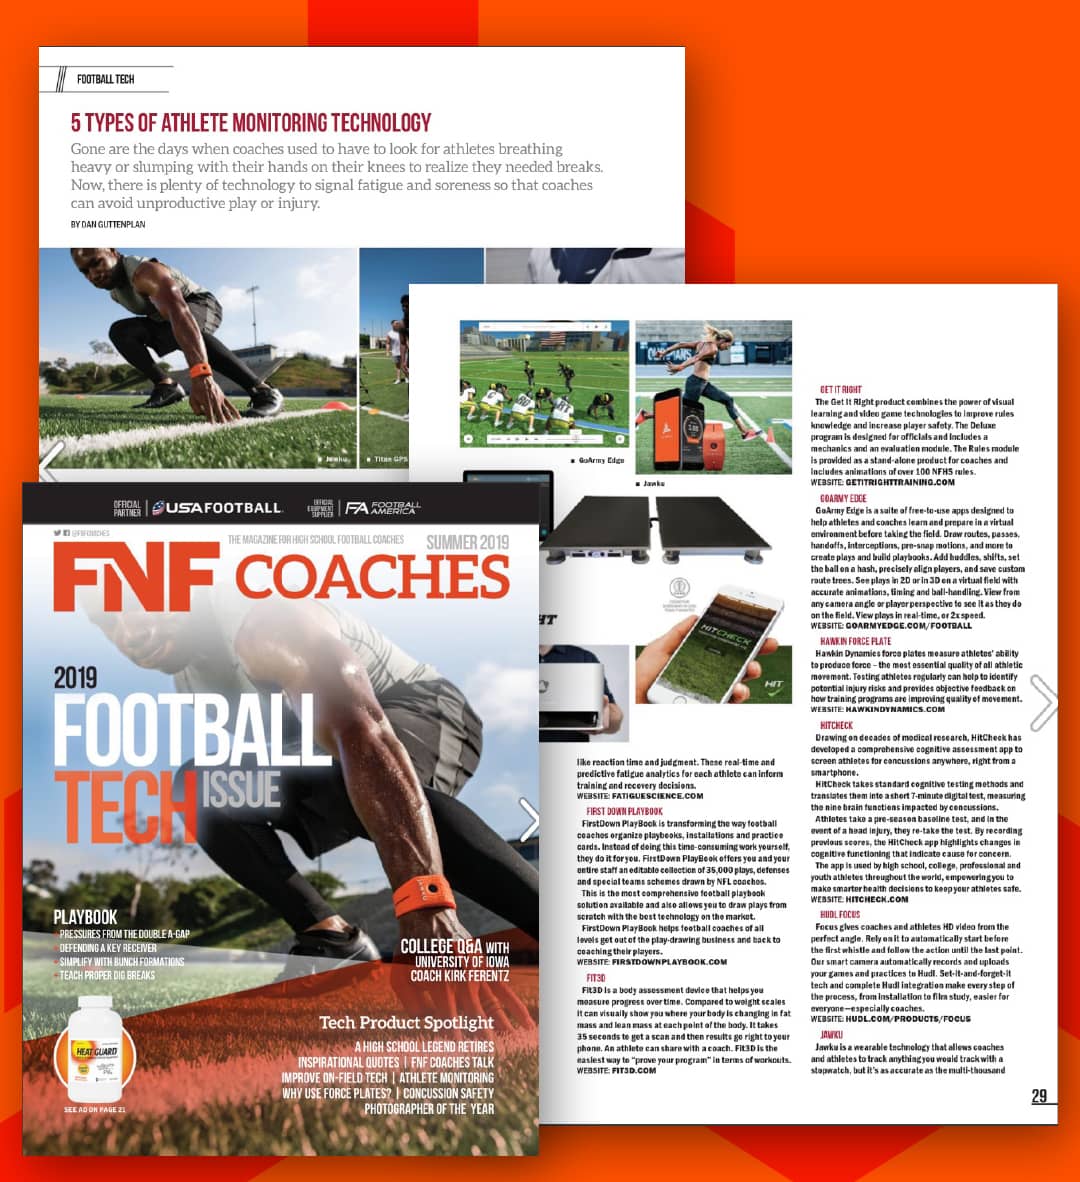 FNF Coaches Magazine